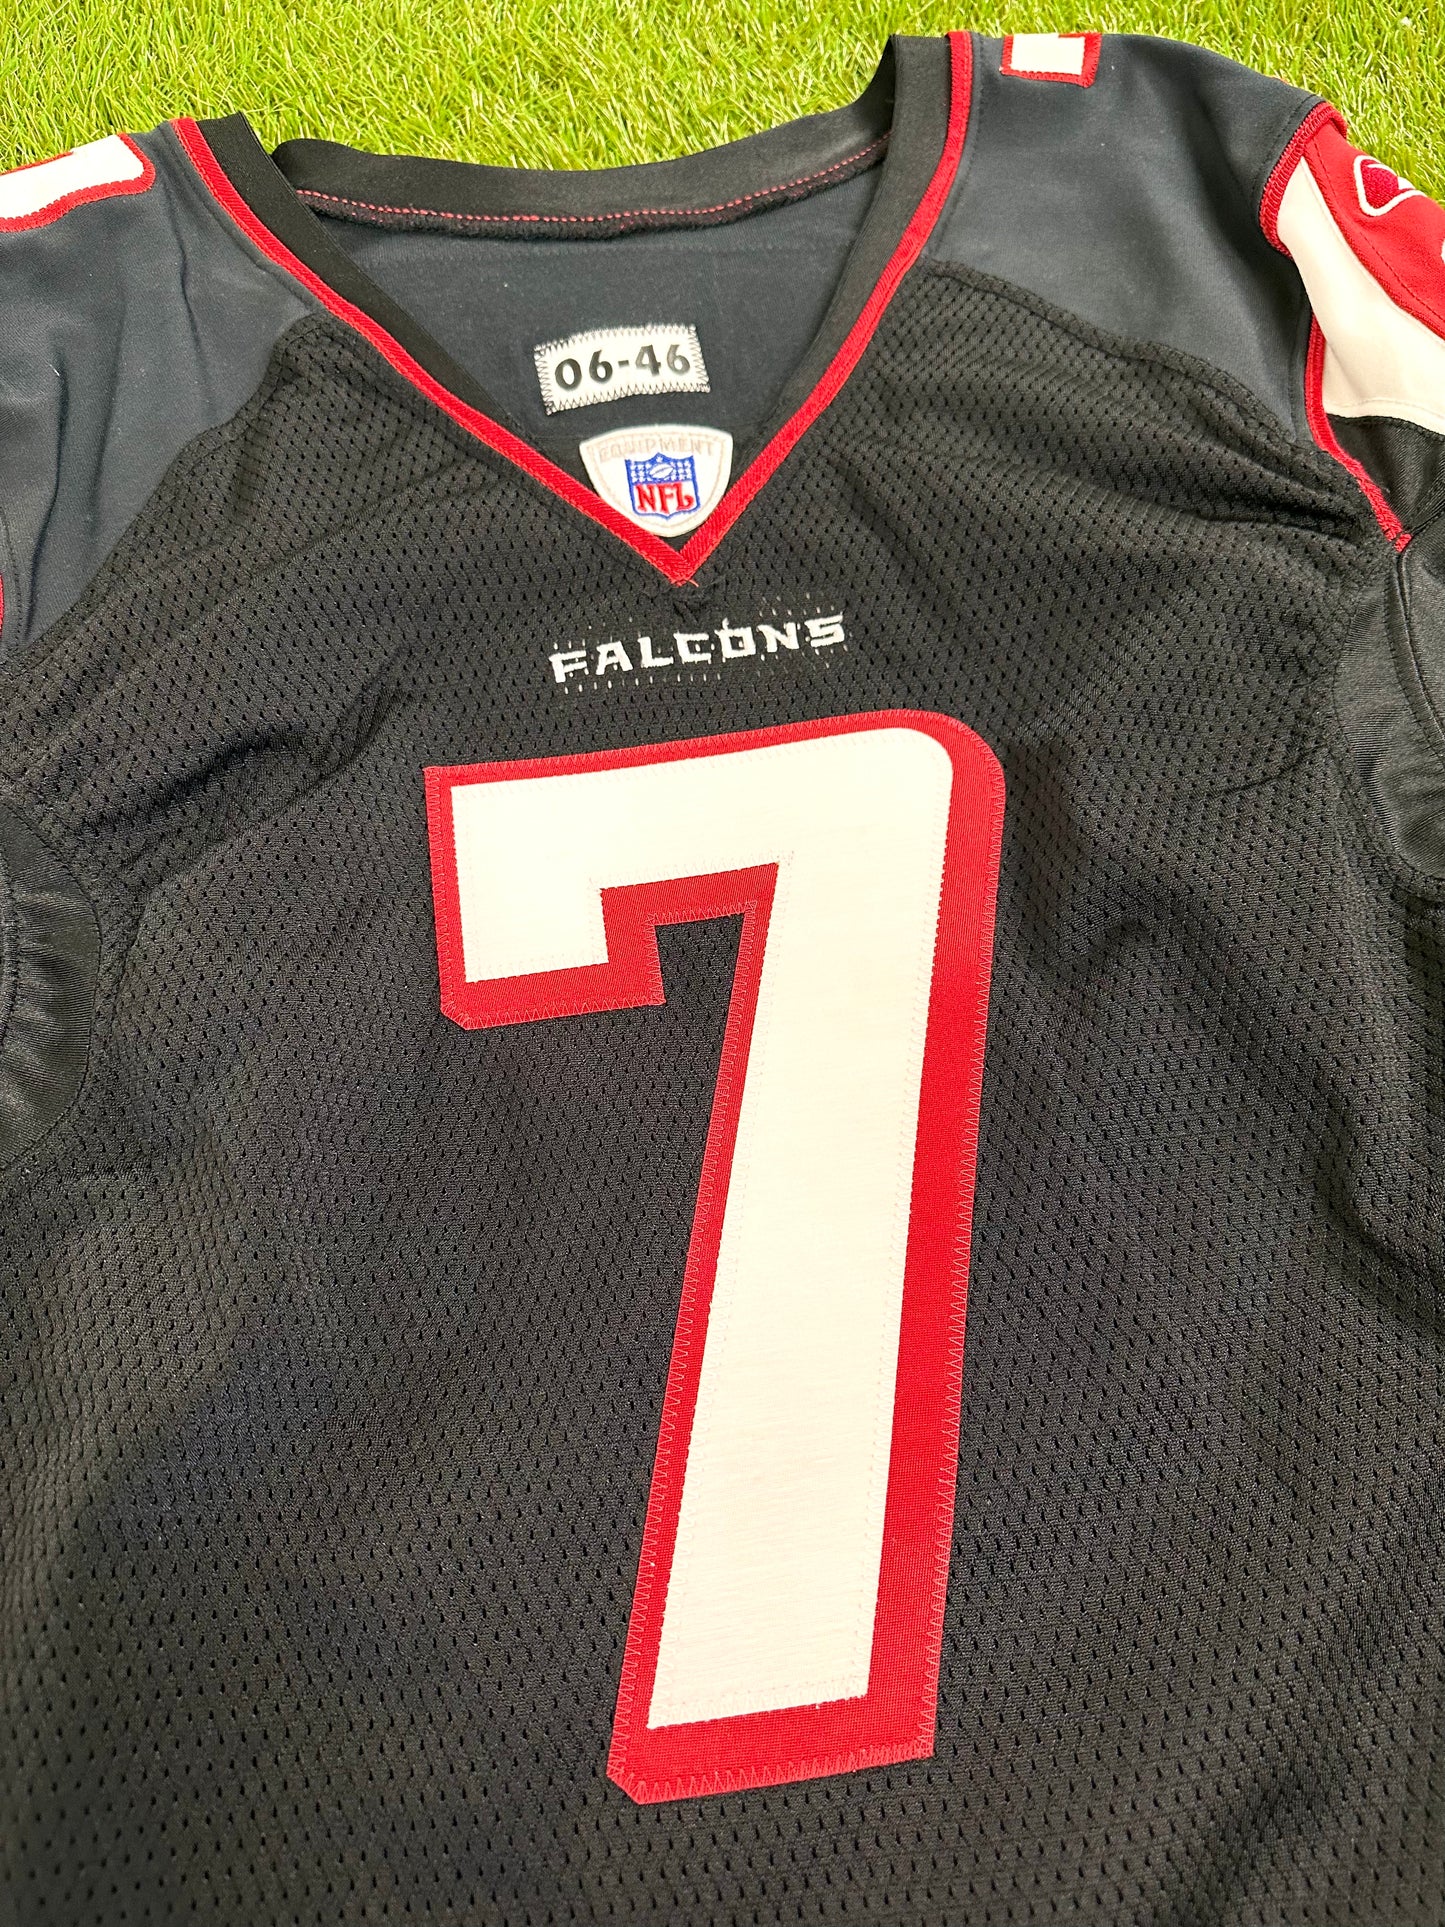 Atlanta Falcons Michael Vick 2006 Alternate NFL Football Jersey (46/Large)